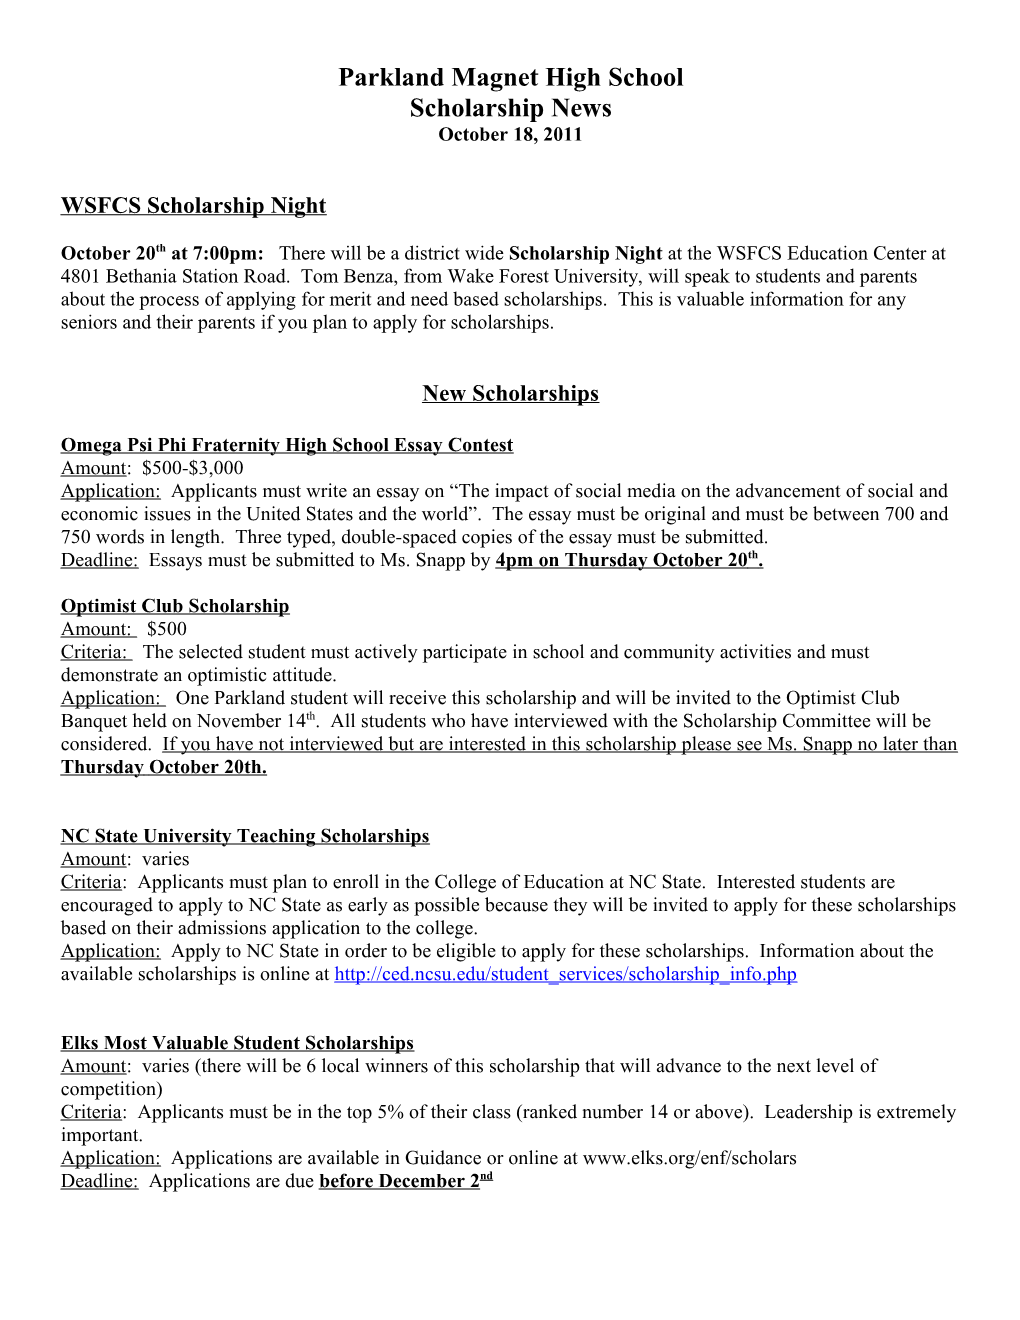 Upcoming Scholarship Deadlines